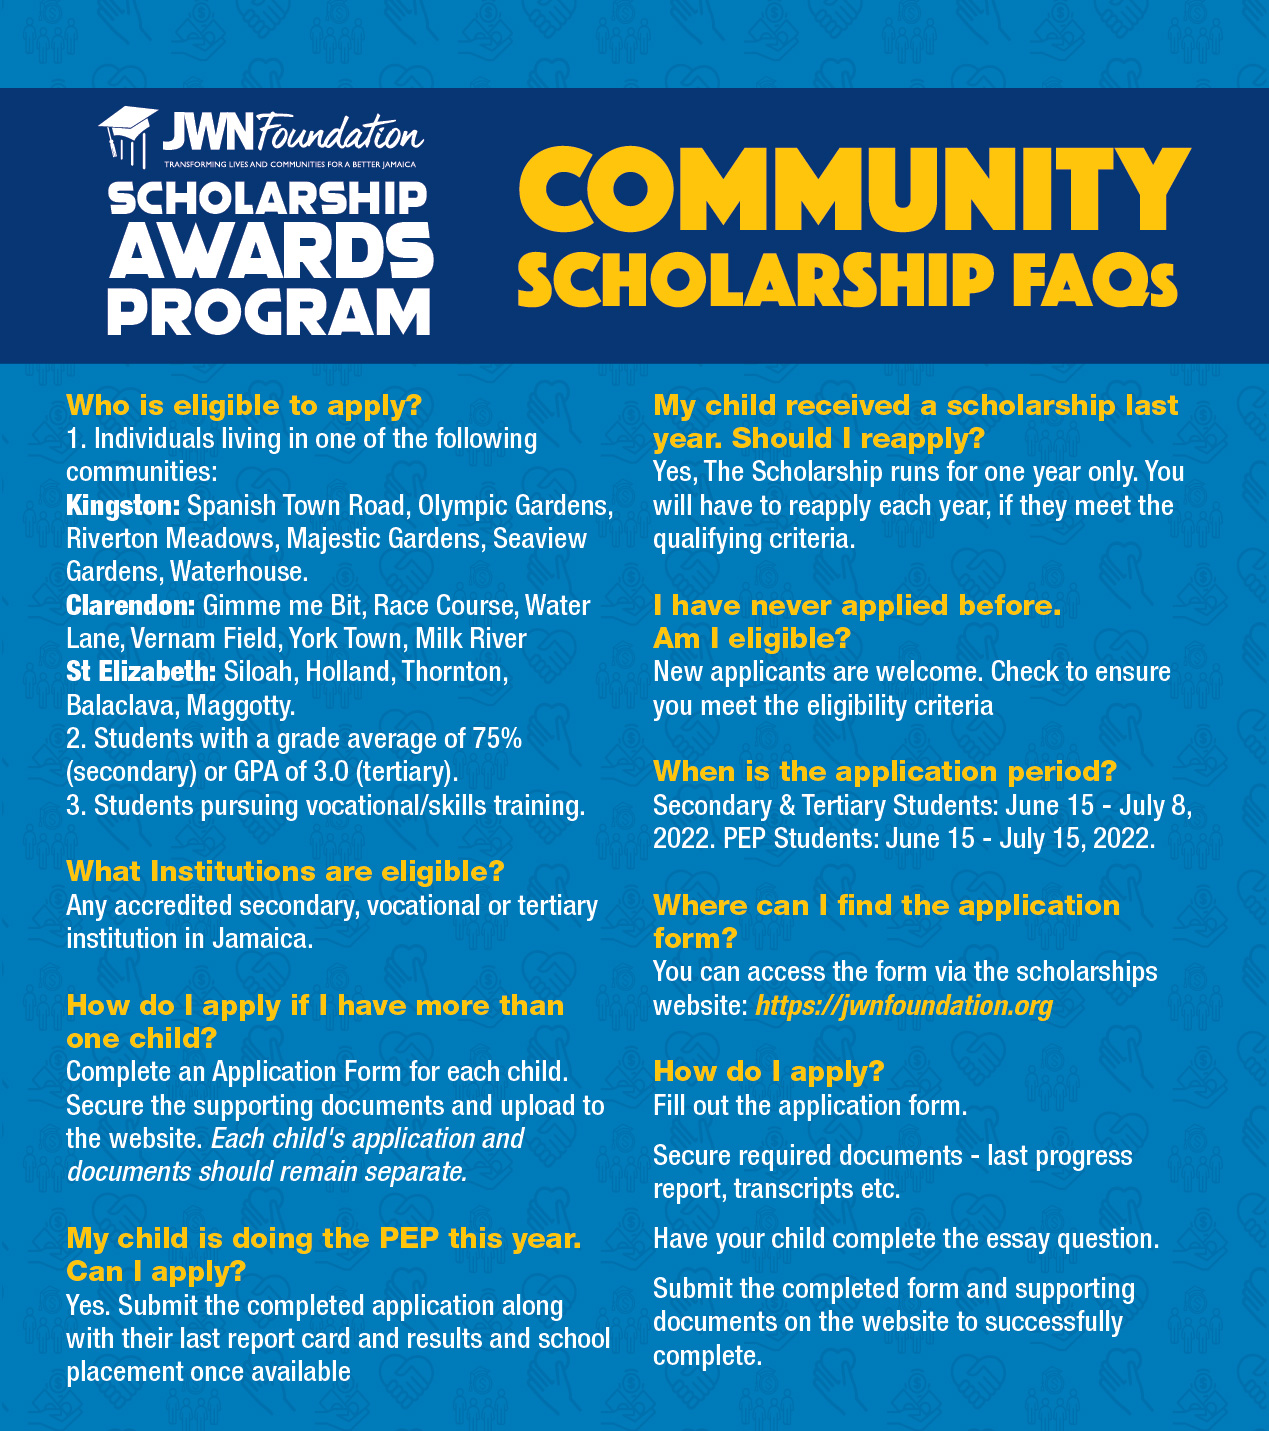 Scholarship FAQs - The JWN Foundation